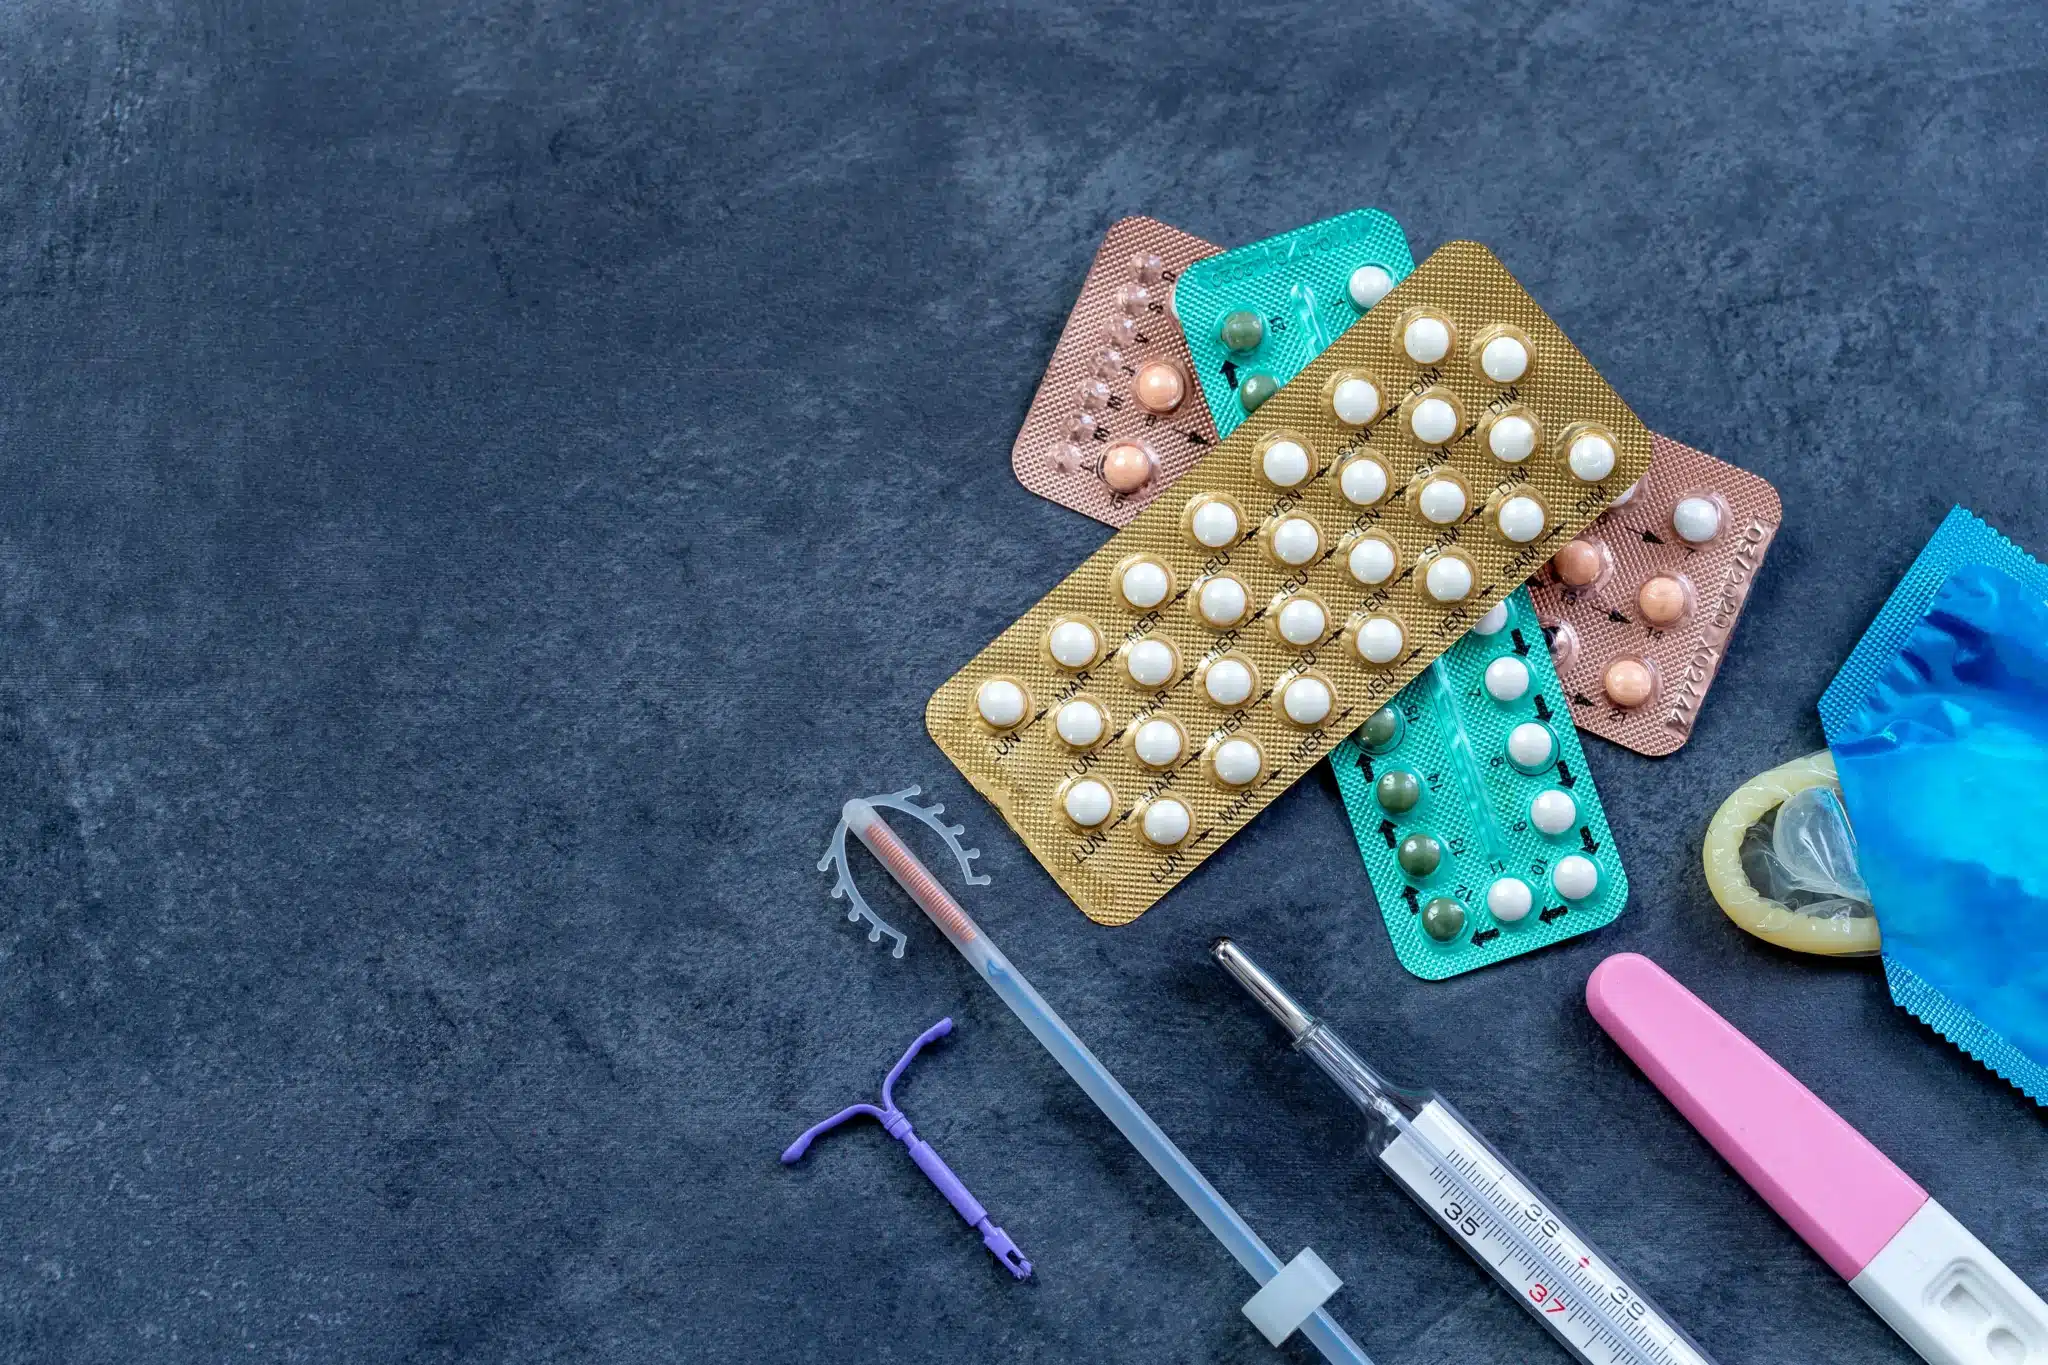 contraceptives, condoms, iuds